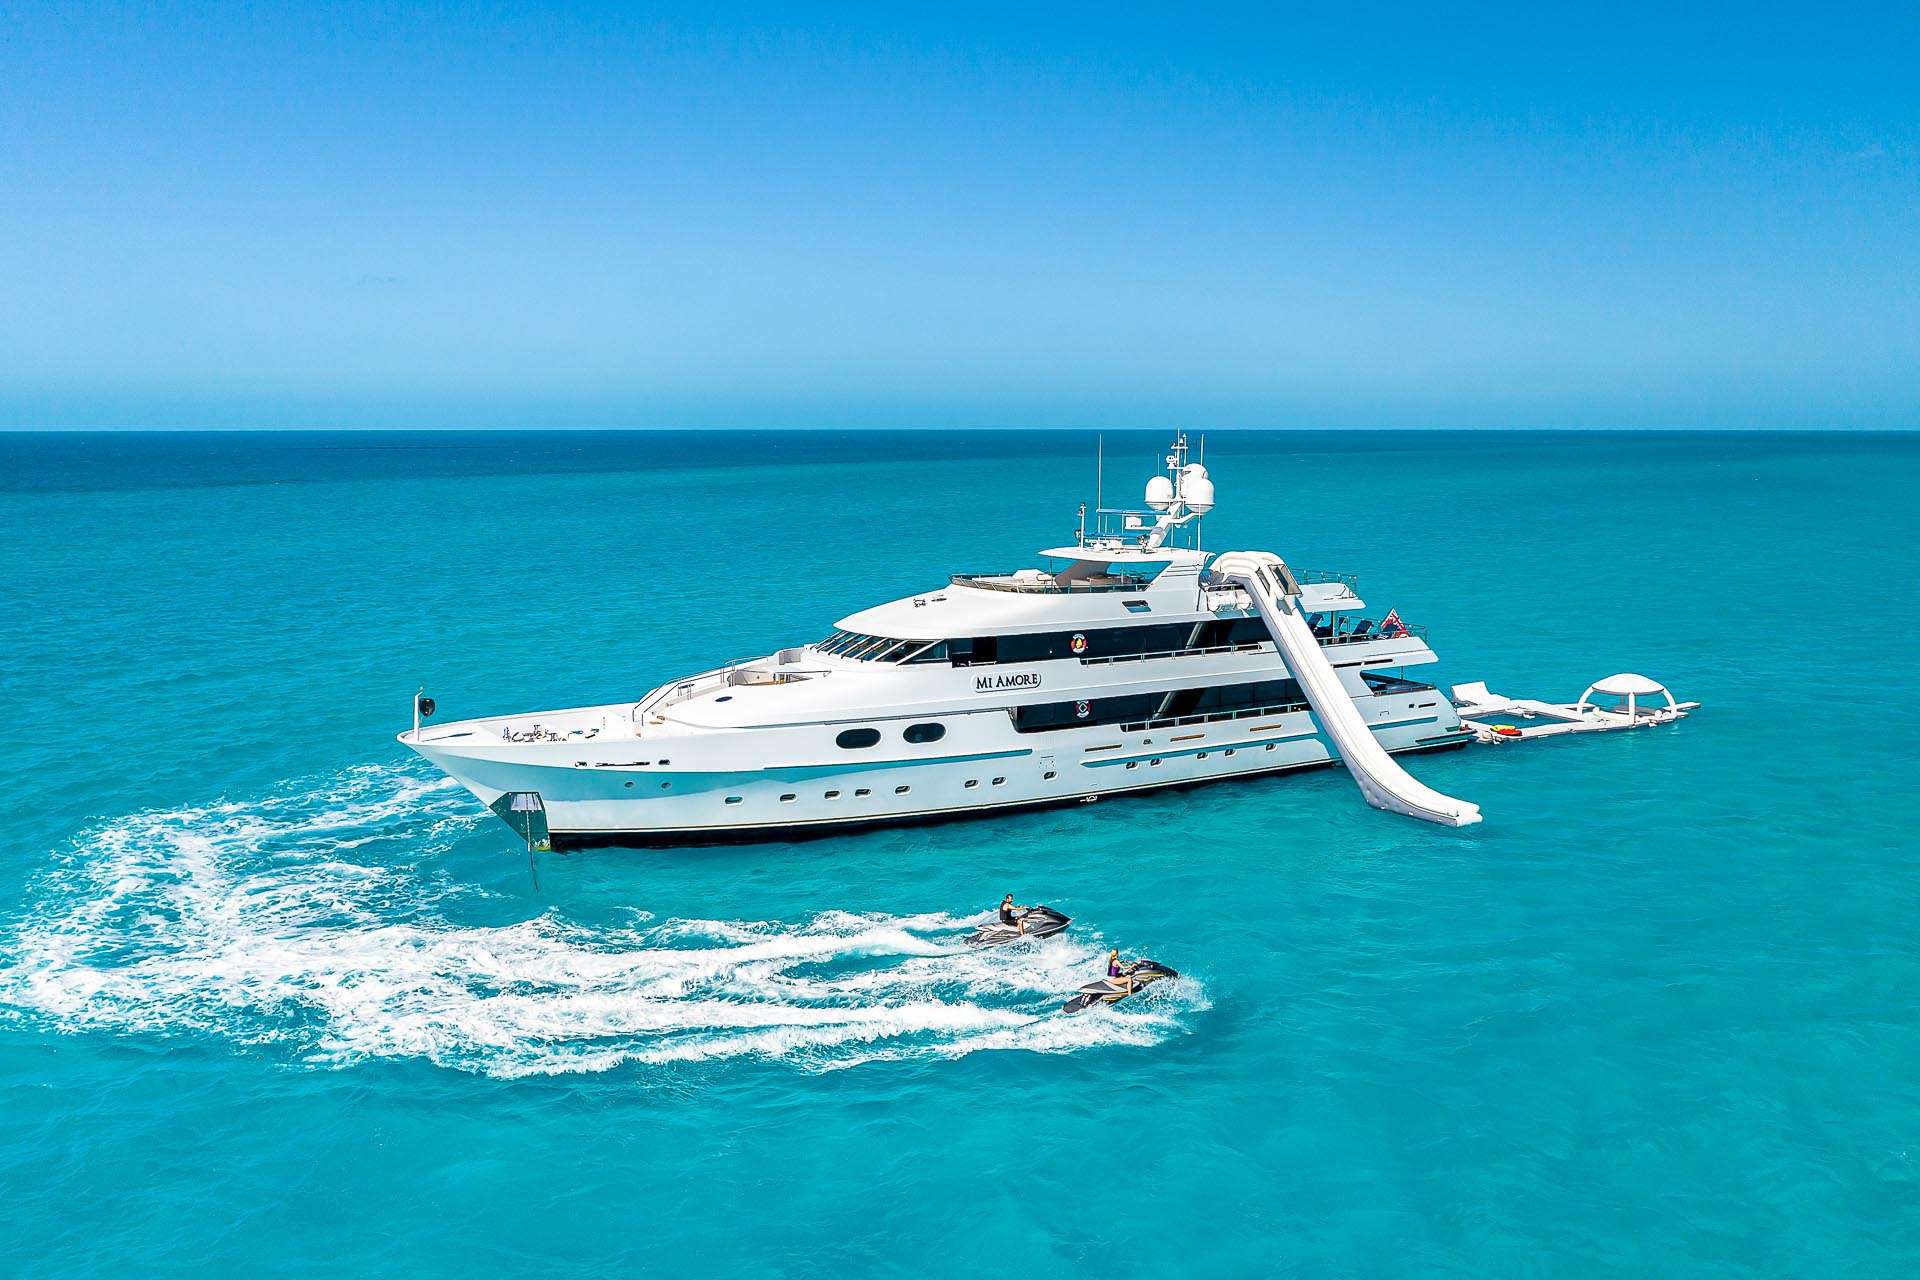 MI AMORE - Yacht Charter Newport & Boat hire in US East Coast & Bahamas 1